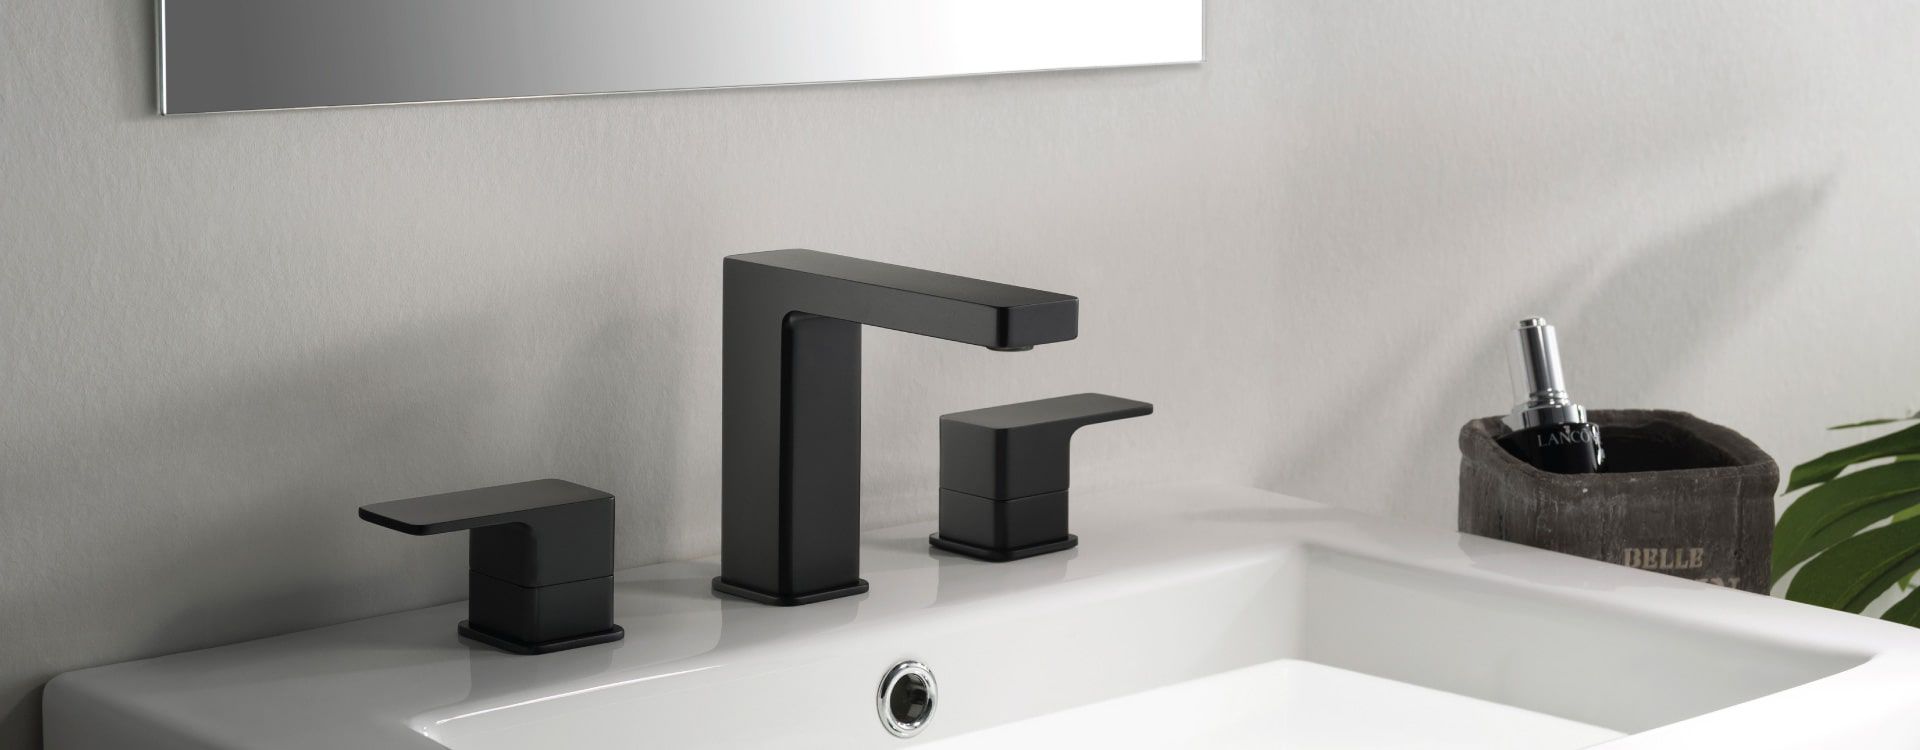 RM Living Cincinnati Modern Interior Design Bathroom Faucet by Isenberg Isenberg7